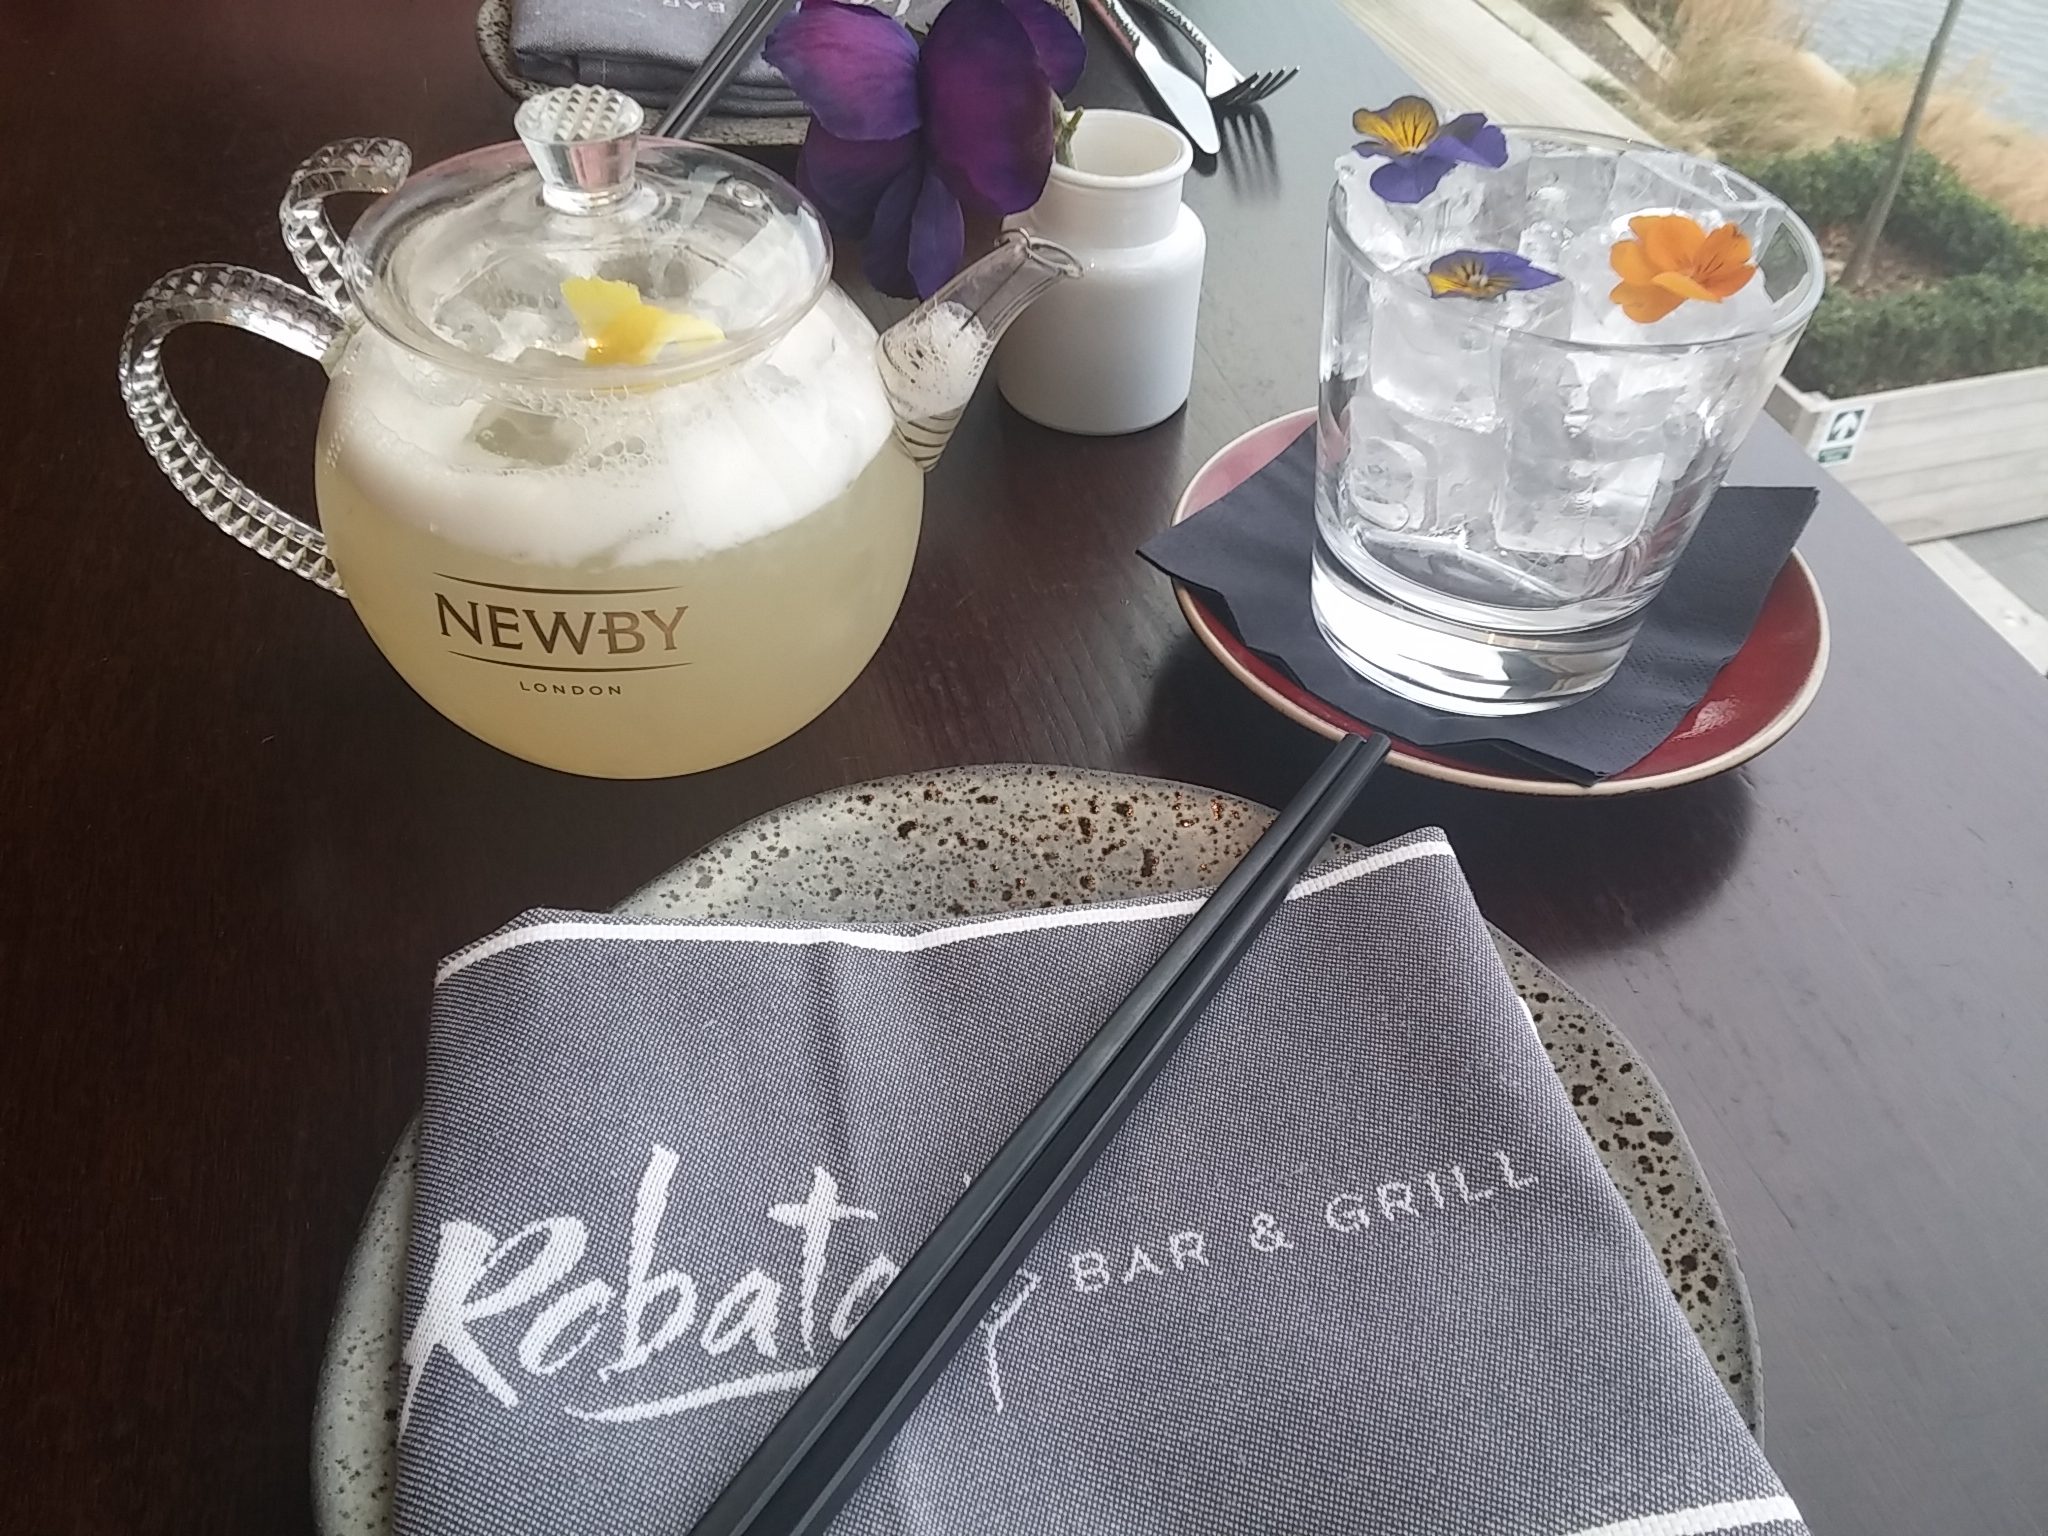 Restaurant review: Robata Bar & Grill, Resorts World, Birmingham